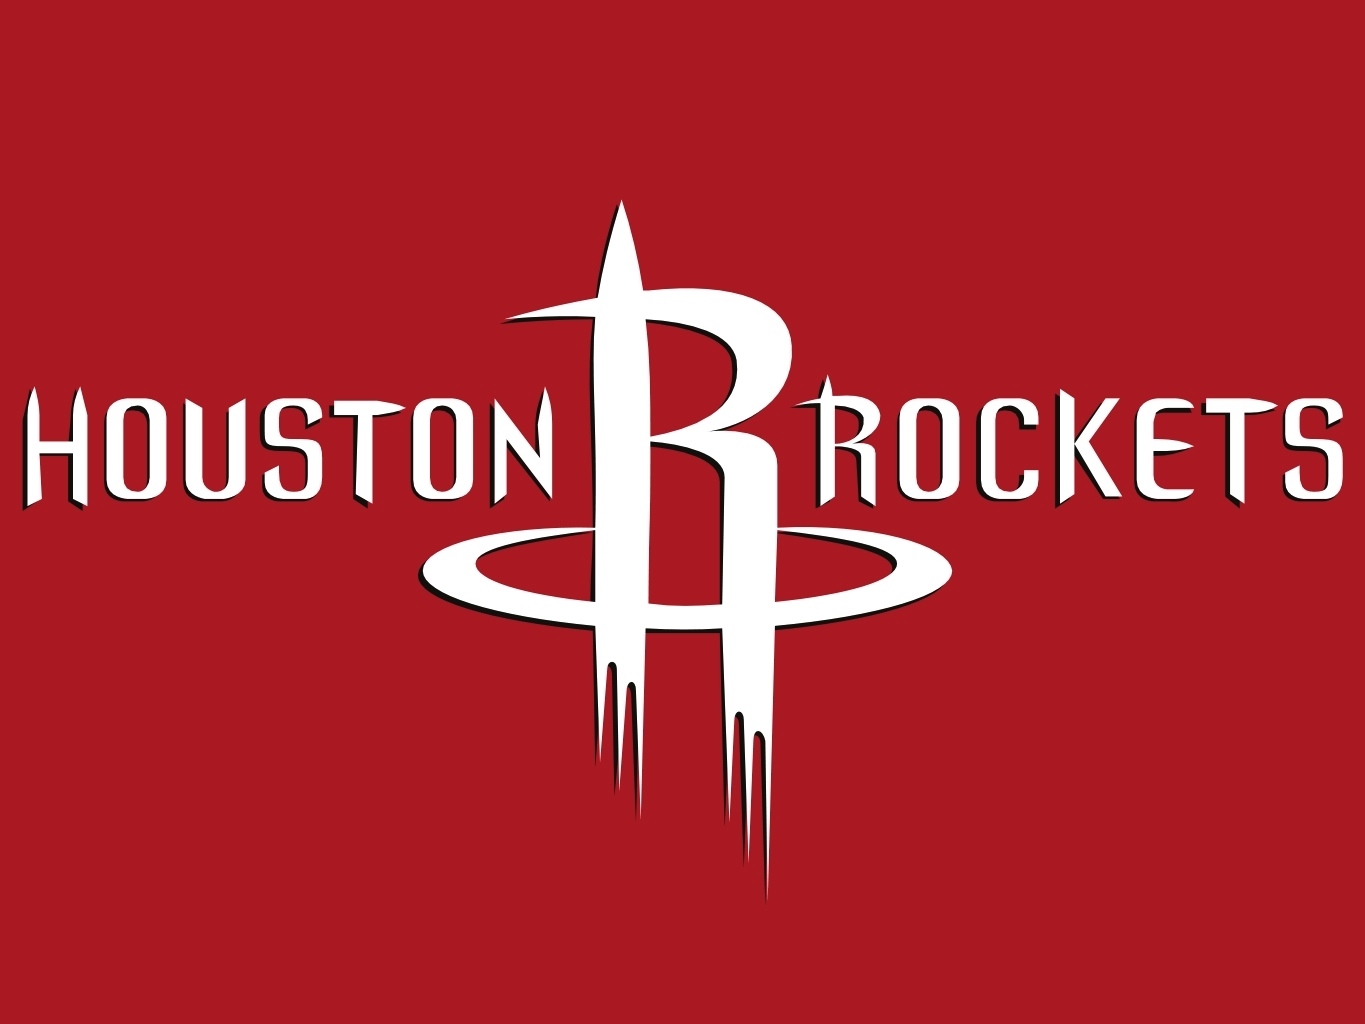 https://blogger.googleusercontent.com/img/b/R29vZ2xl/AVvXsEi8k-8-7bitBBphtmF3-ZdY-Oa9RDPl8EHWRQsyhIcN8J0WLHutTHJUDt6eS9udxaGlkdTqJYame5bTQwWzxuUiN8Kj9xIW5DLUgPh16nterj5Md27Z9l8taBArYJKxb9AtZDI247W6wvM/s1600/Houston_Rockets.jpg